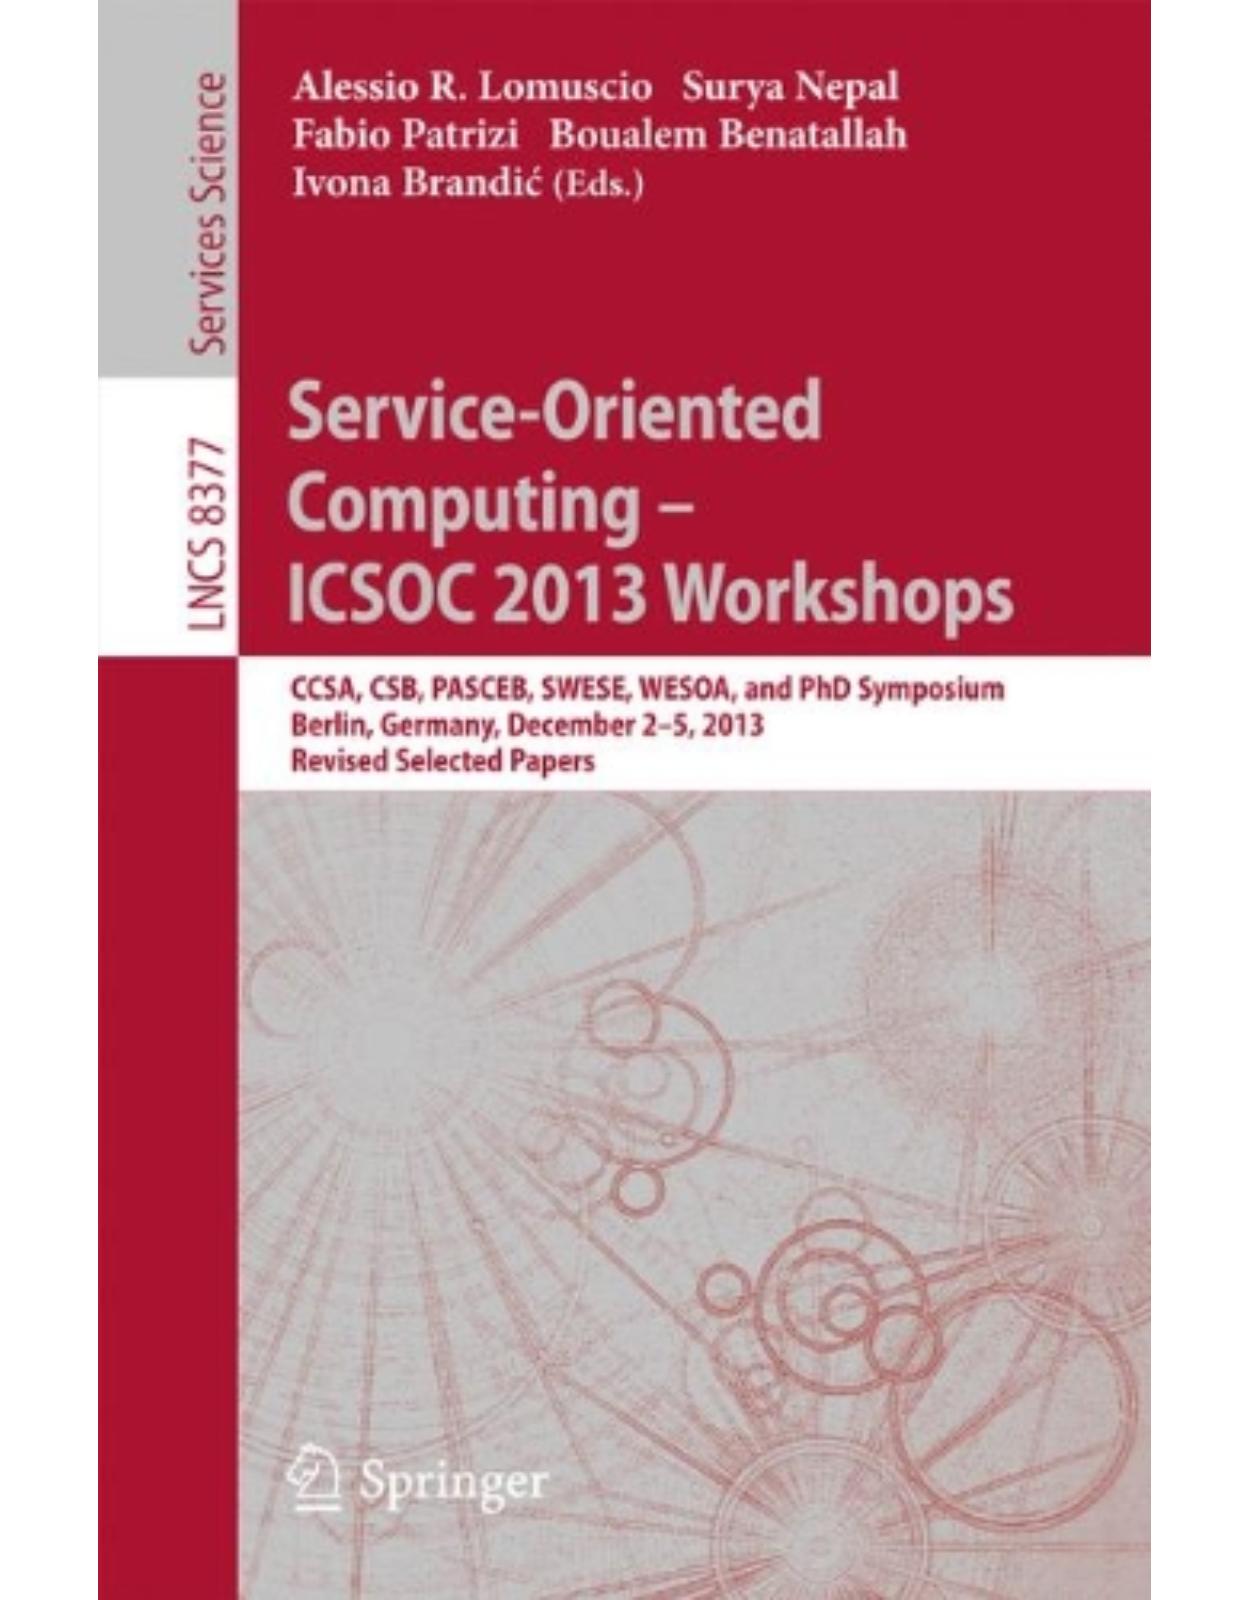 ServiceOriented ComputingICSOC 2013 Workshops